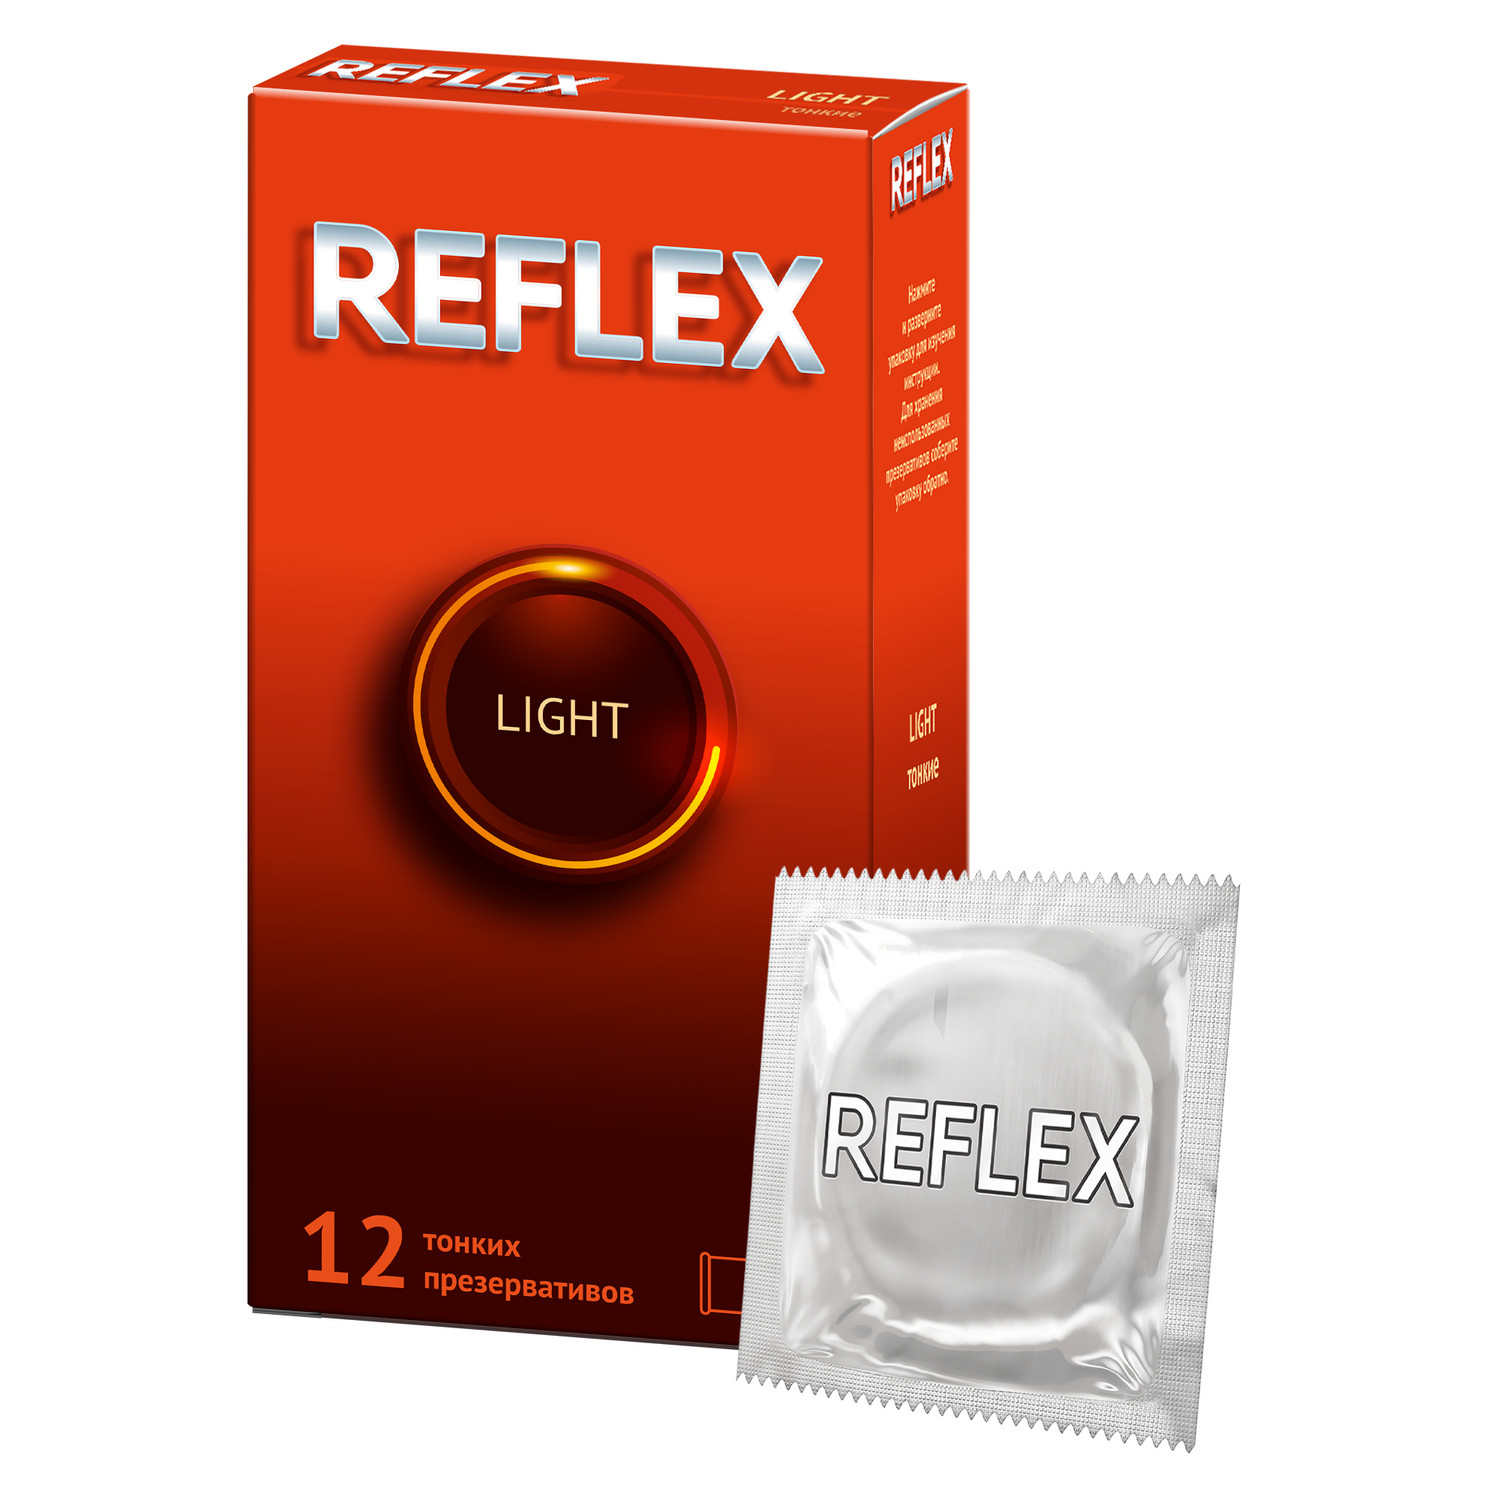 Reflex Light презервативы в смазке, 12 шт. презервативы lavest анатомической формы розового а 7 шт